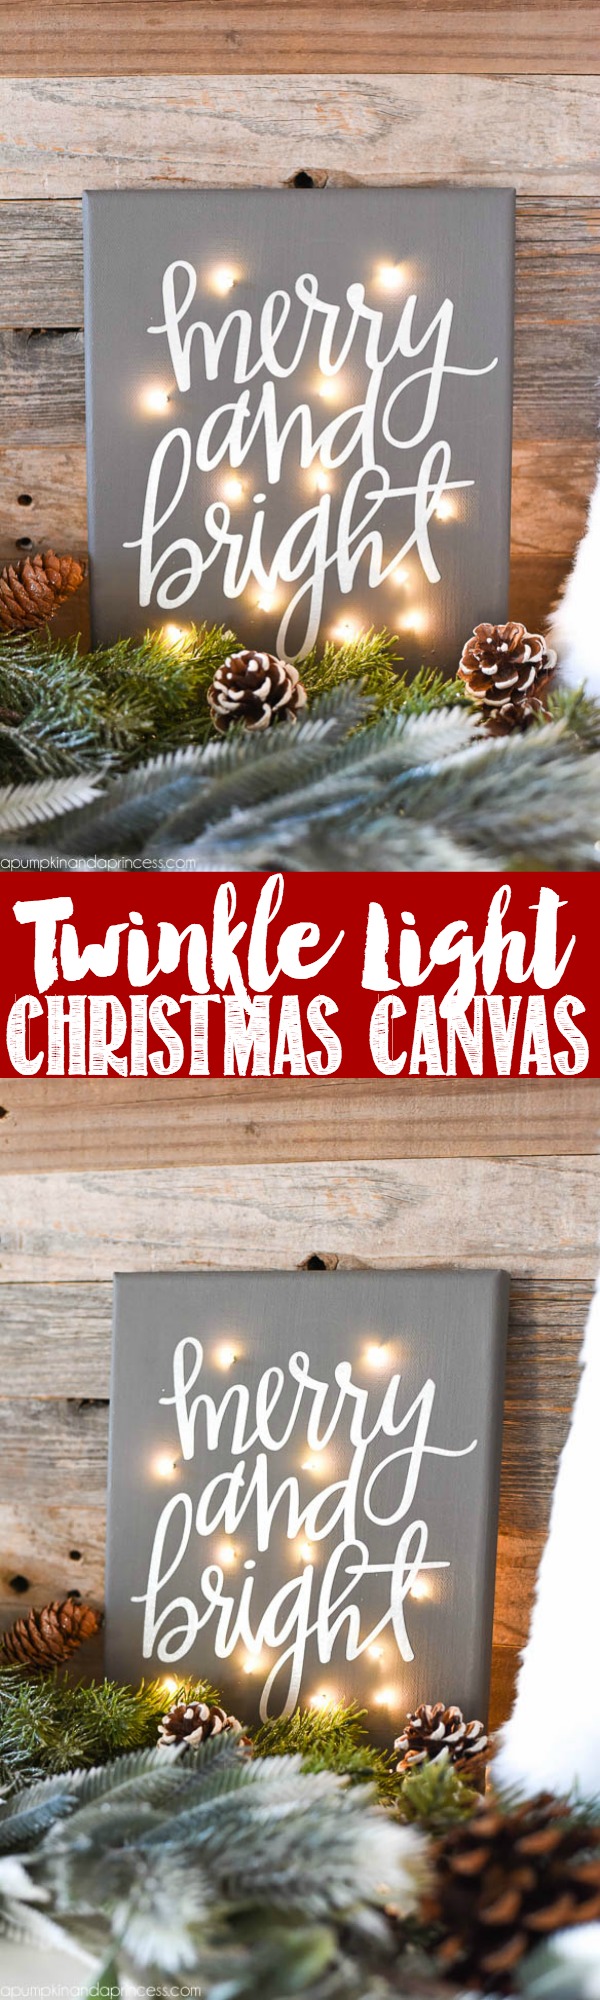 DIY Twinkle Light Christmas Canvas - how to make a Merry & Bright Christmas canvas with fairy lights